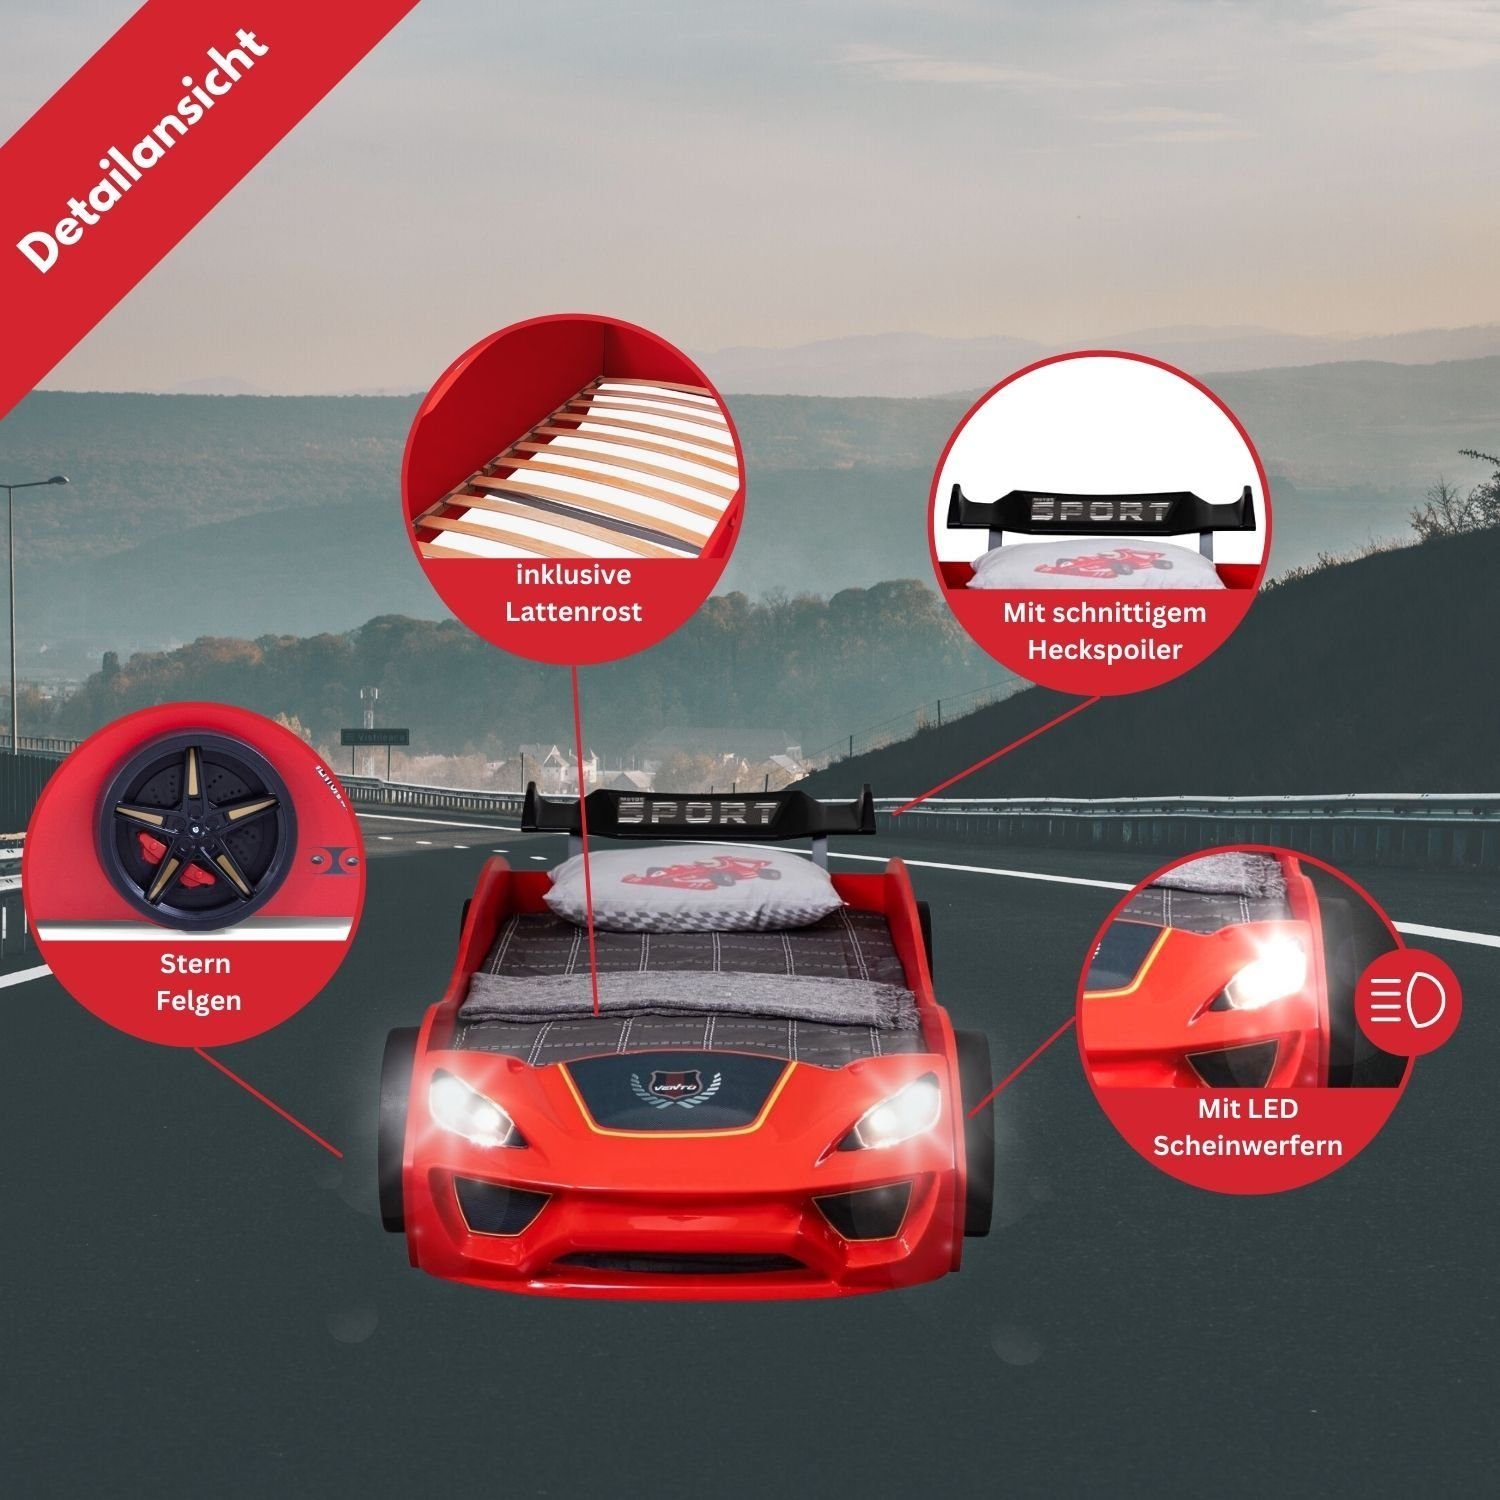 DREAM Rot Renn-Design Rot Lattenrost mit 90x200 Coemo mit Spoiler), (Kinderbett RACER | Autobett